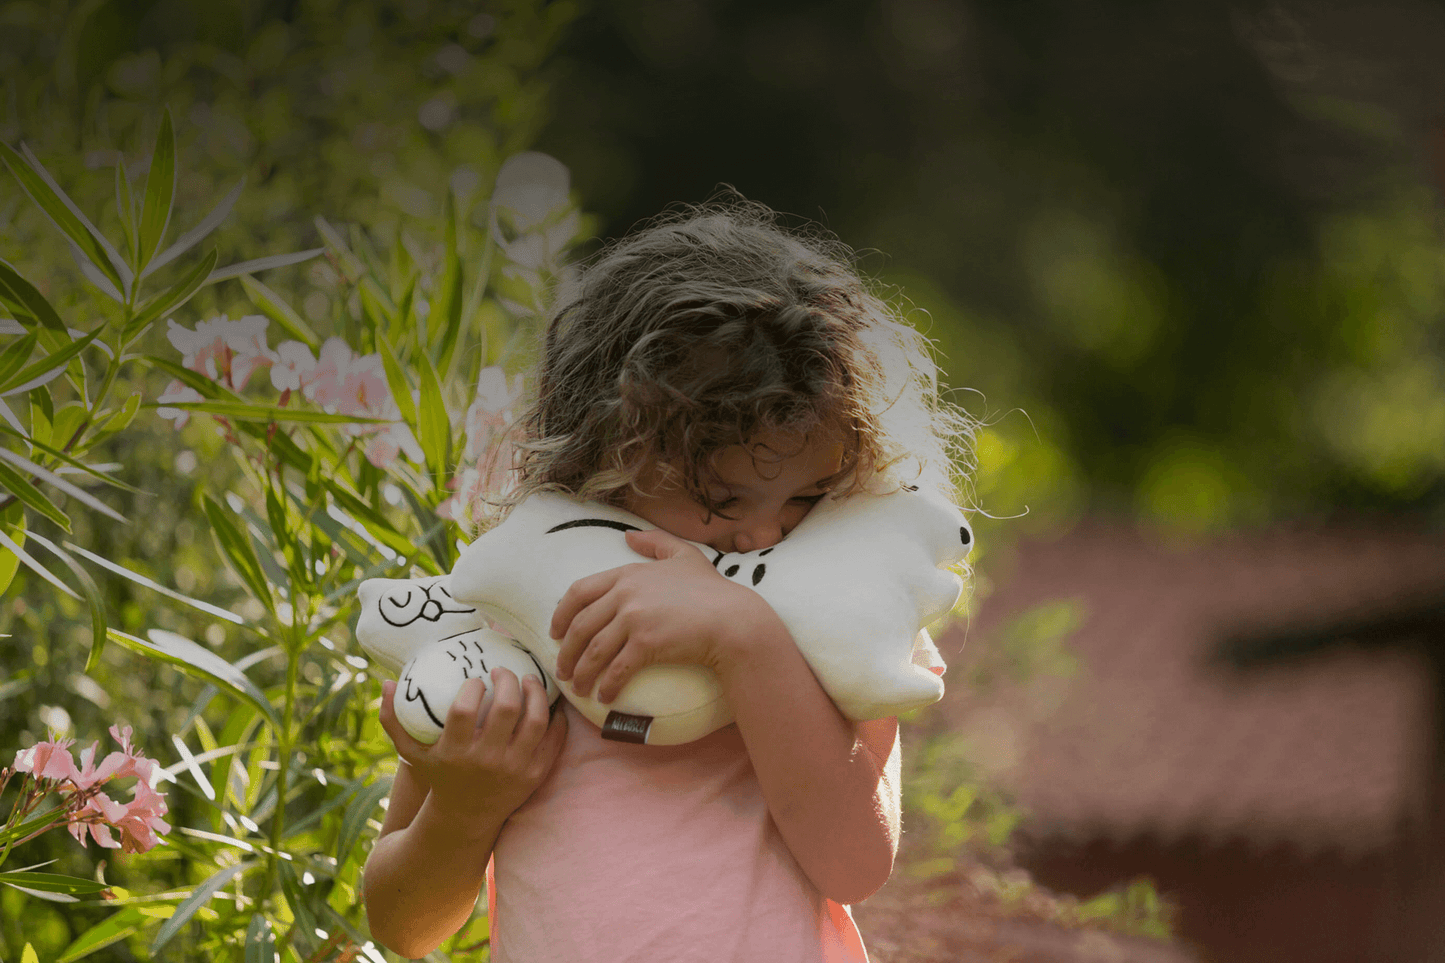 bambina felice che abbraccia un cuscino a forma di scoiattolo